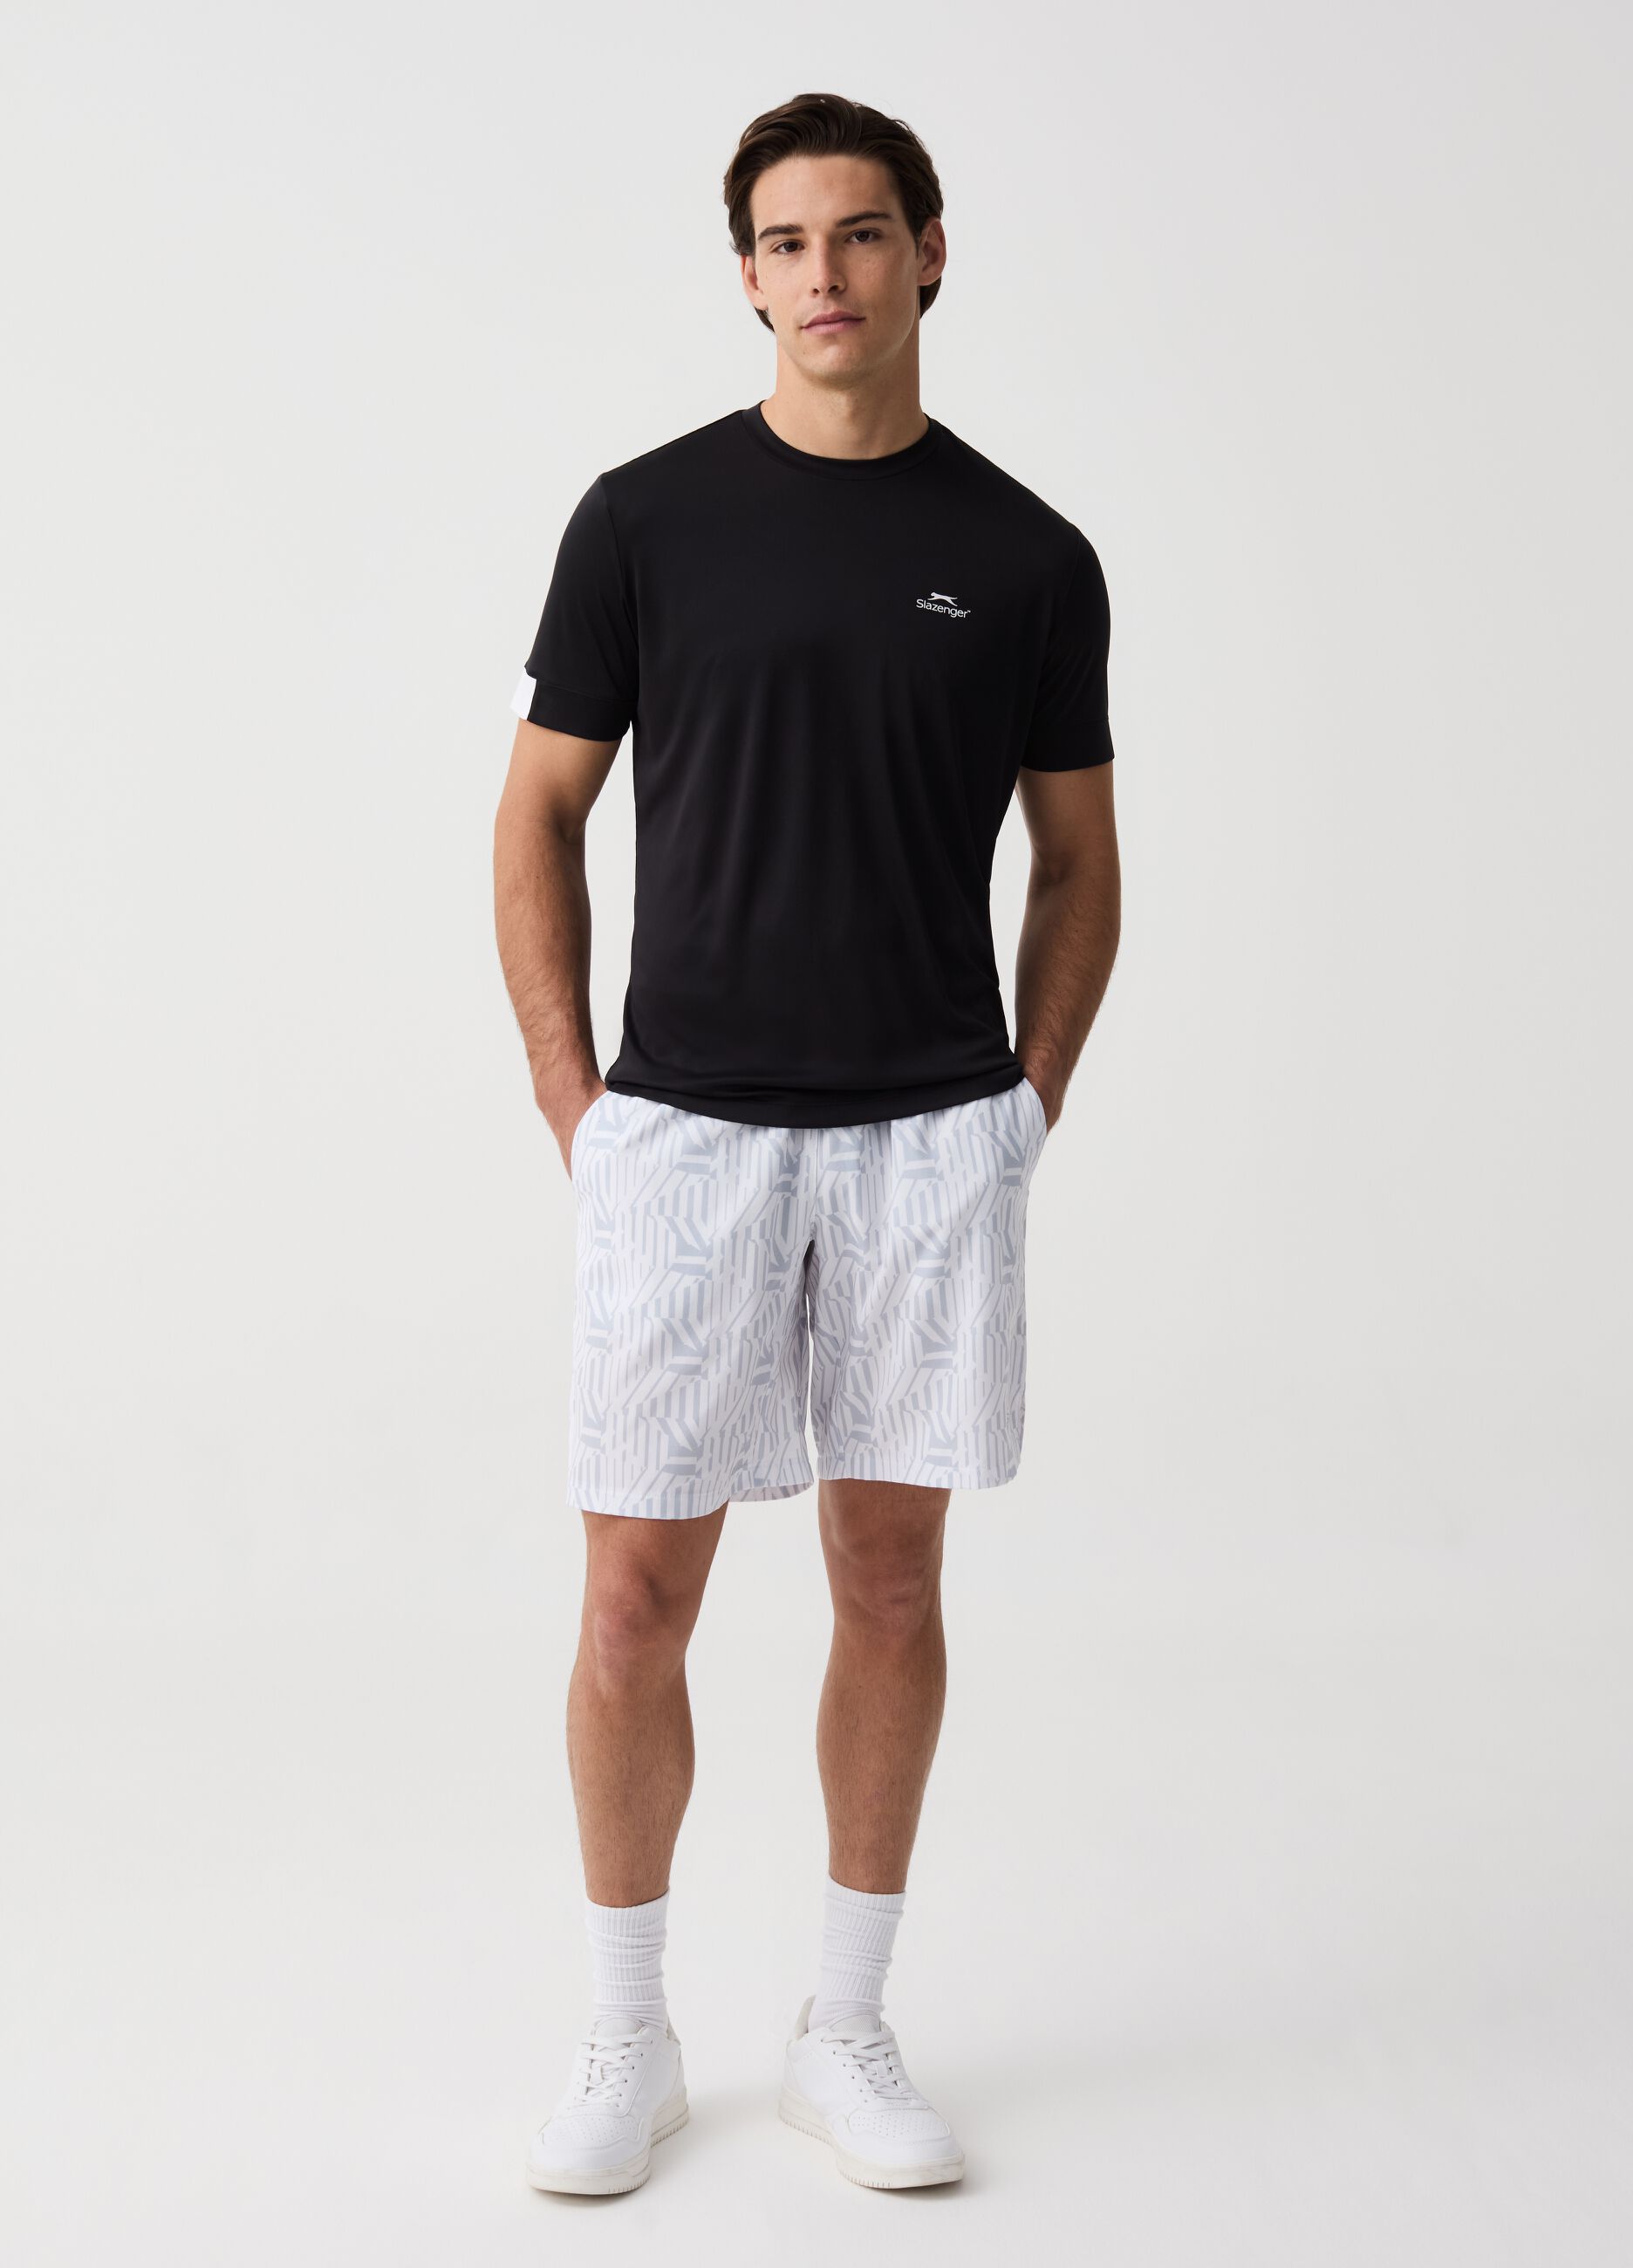 Slazenger quick-dry tennis Bermuda shorts